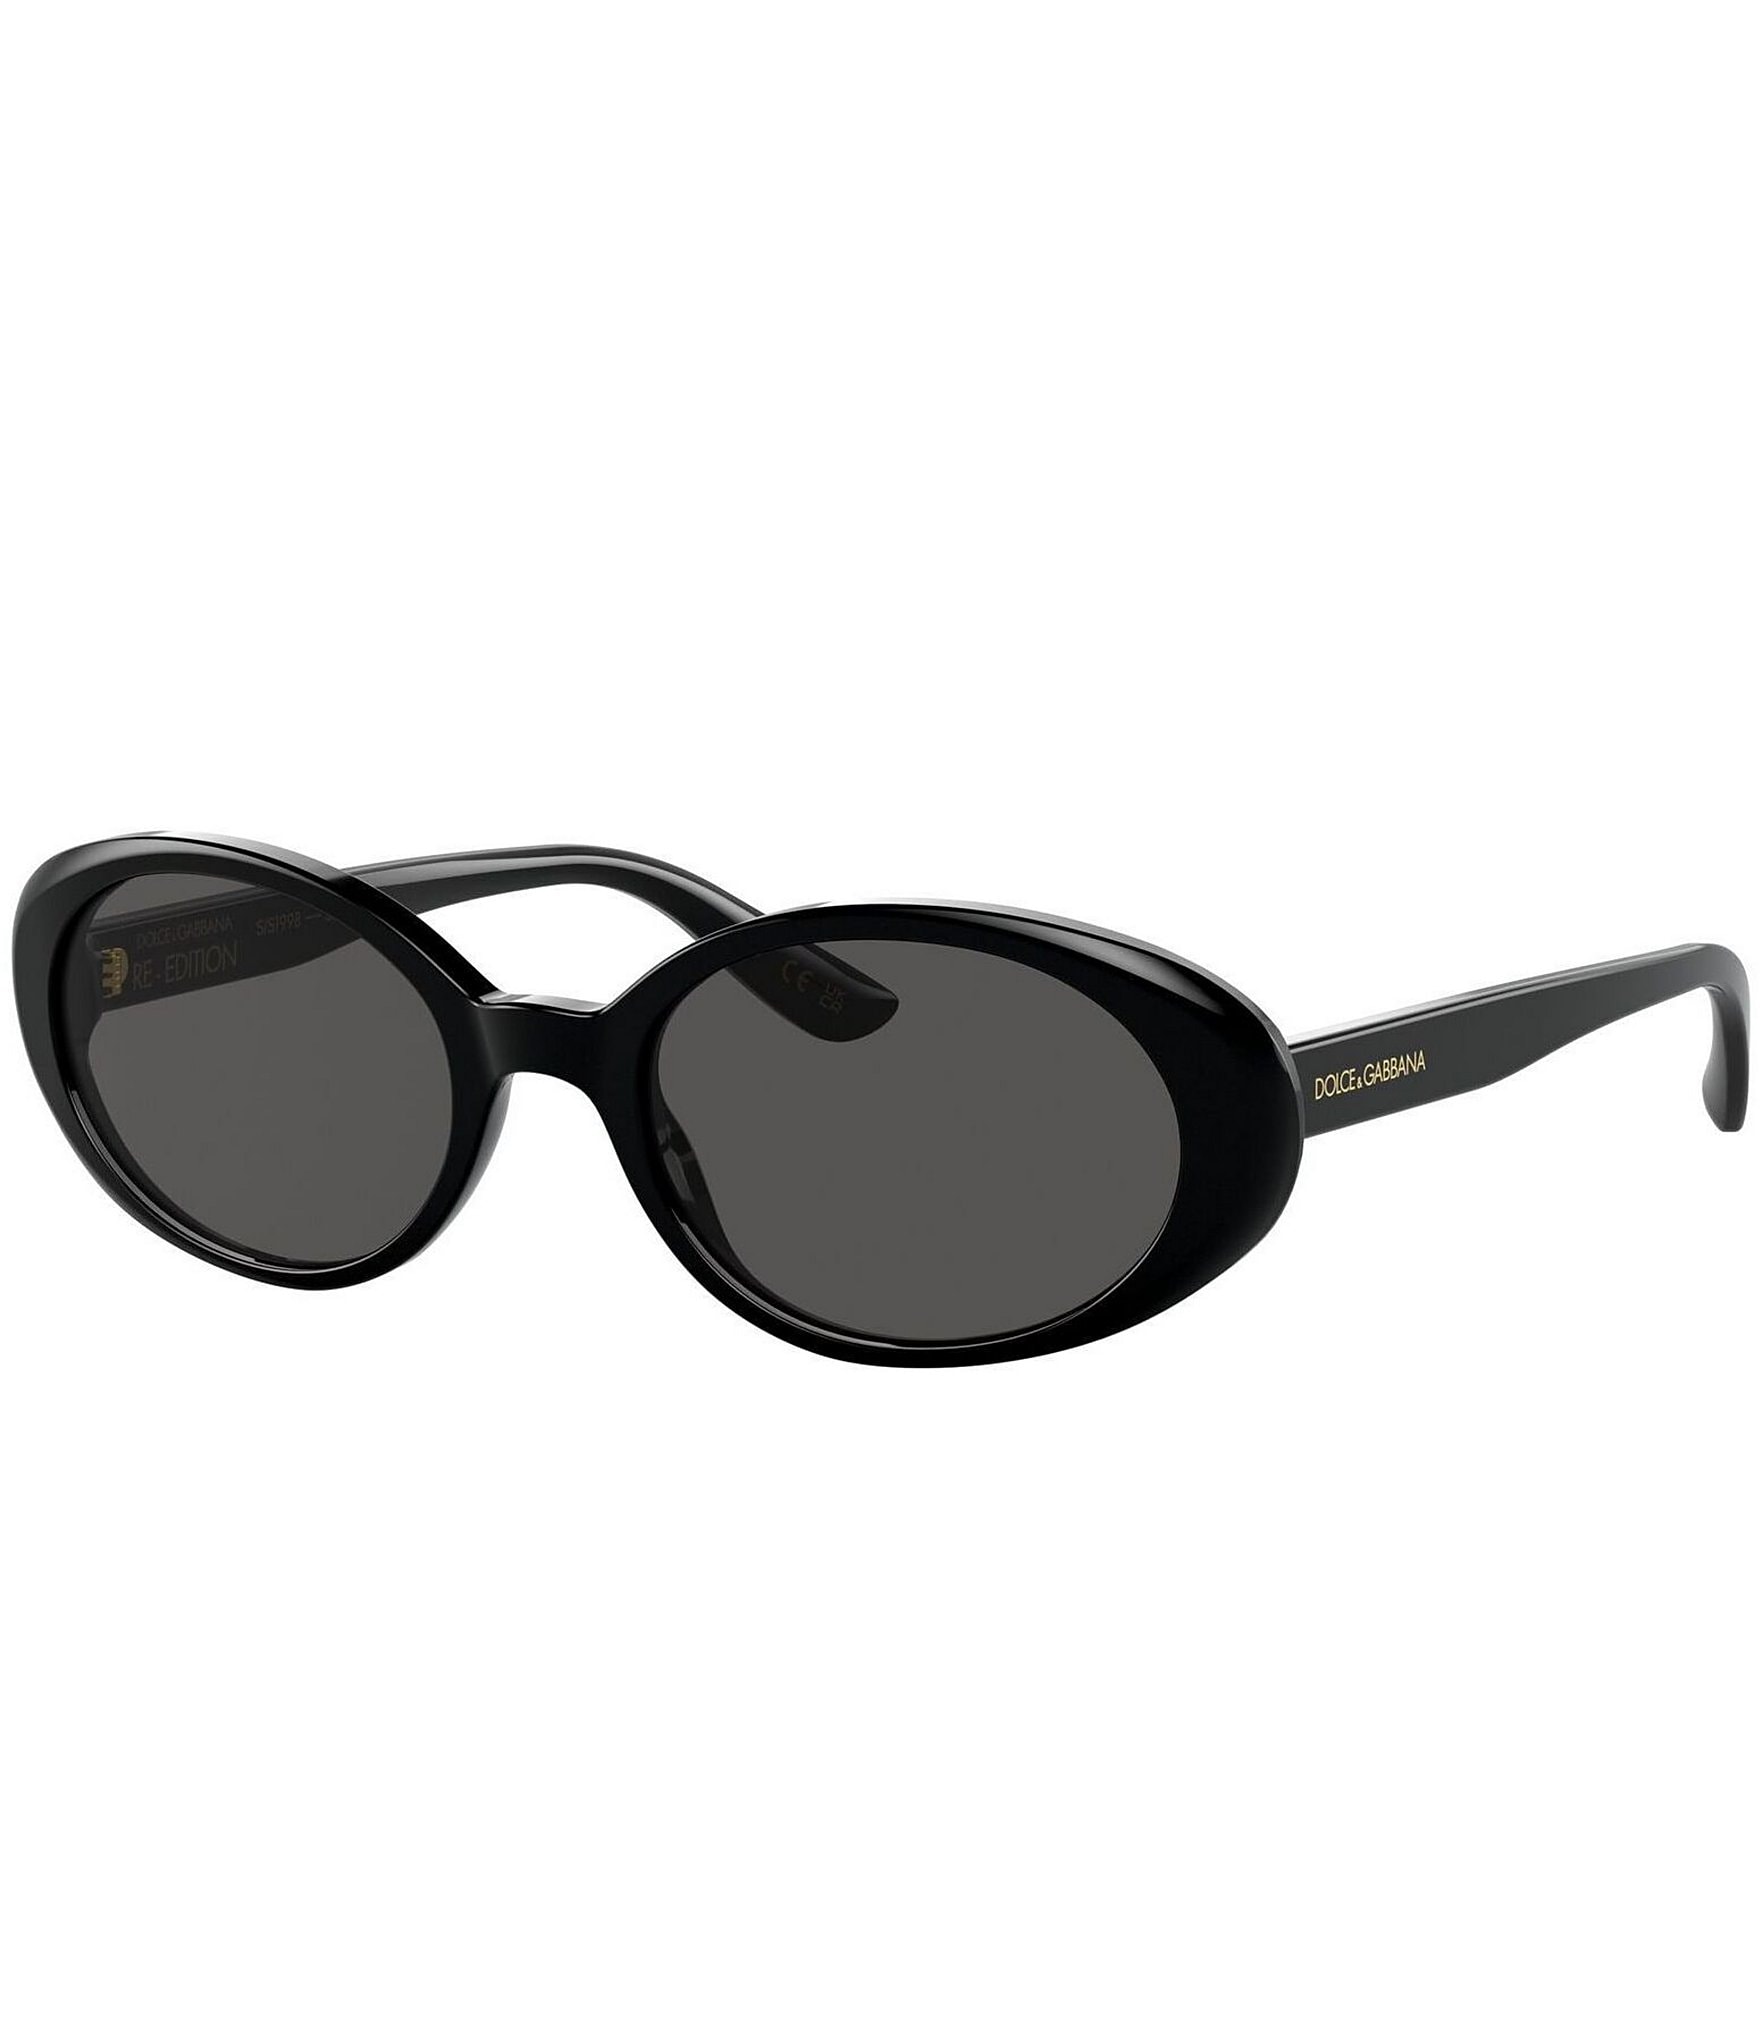 Dolce & Gabbana Women's DG4443 52mm Oval Sunglasses